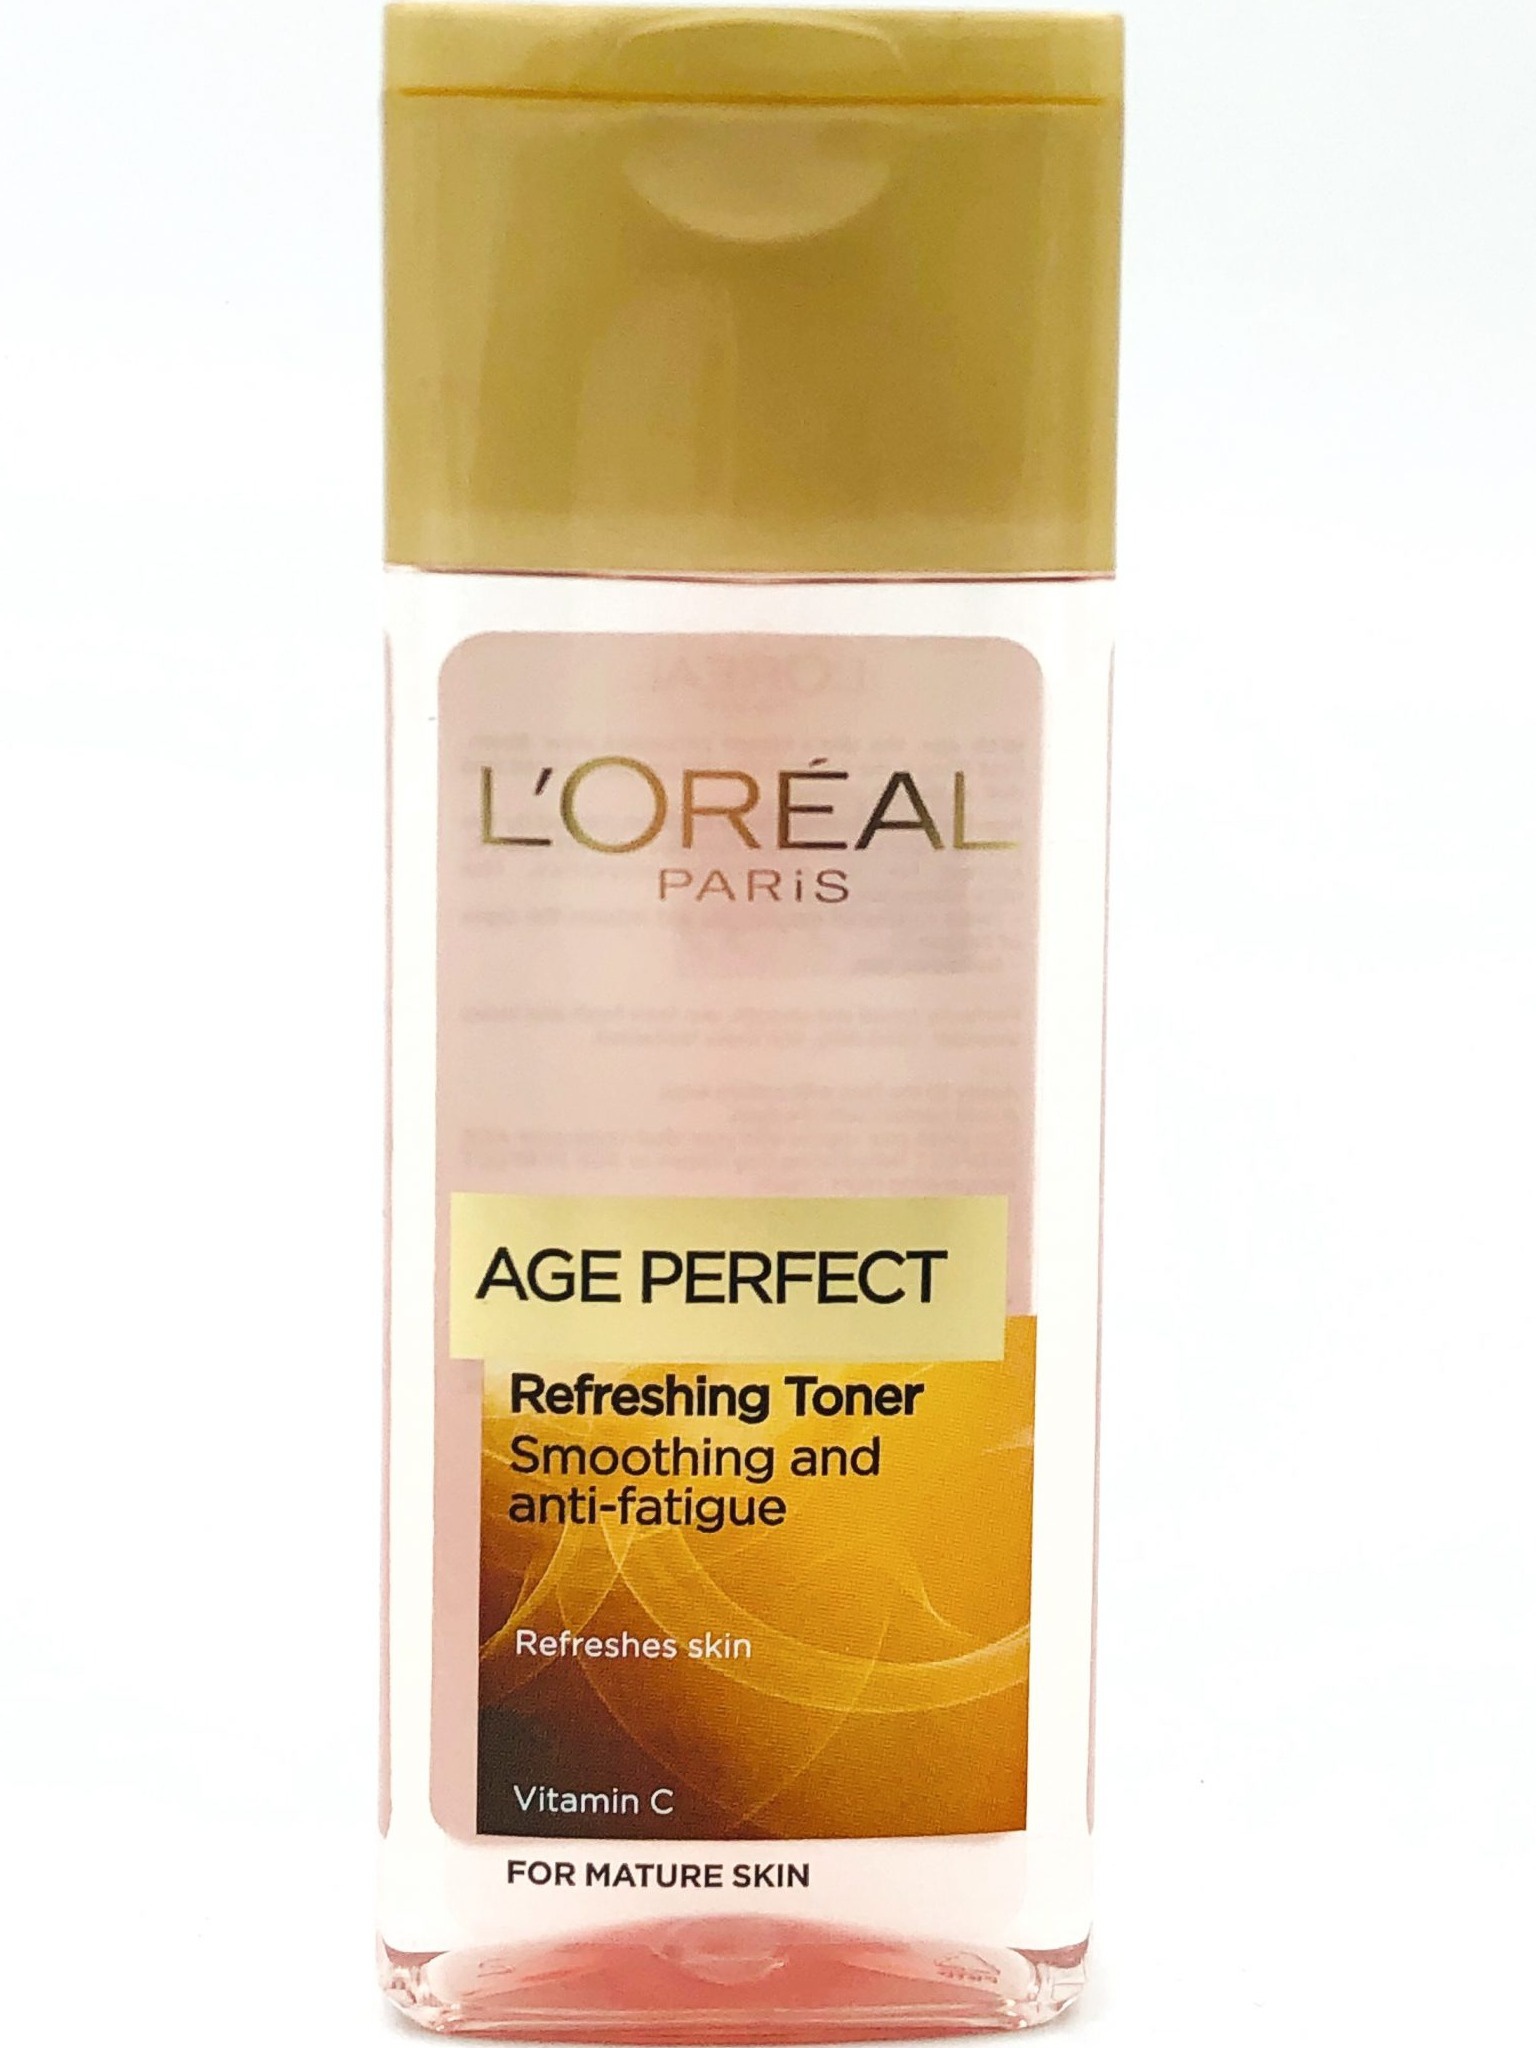 L'Oreal Age Perfect Refreshing Toner